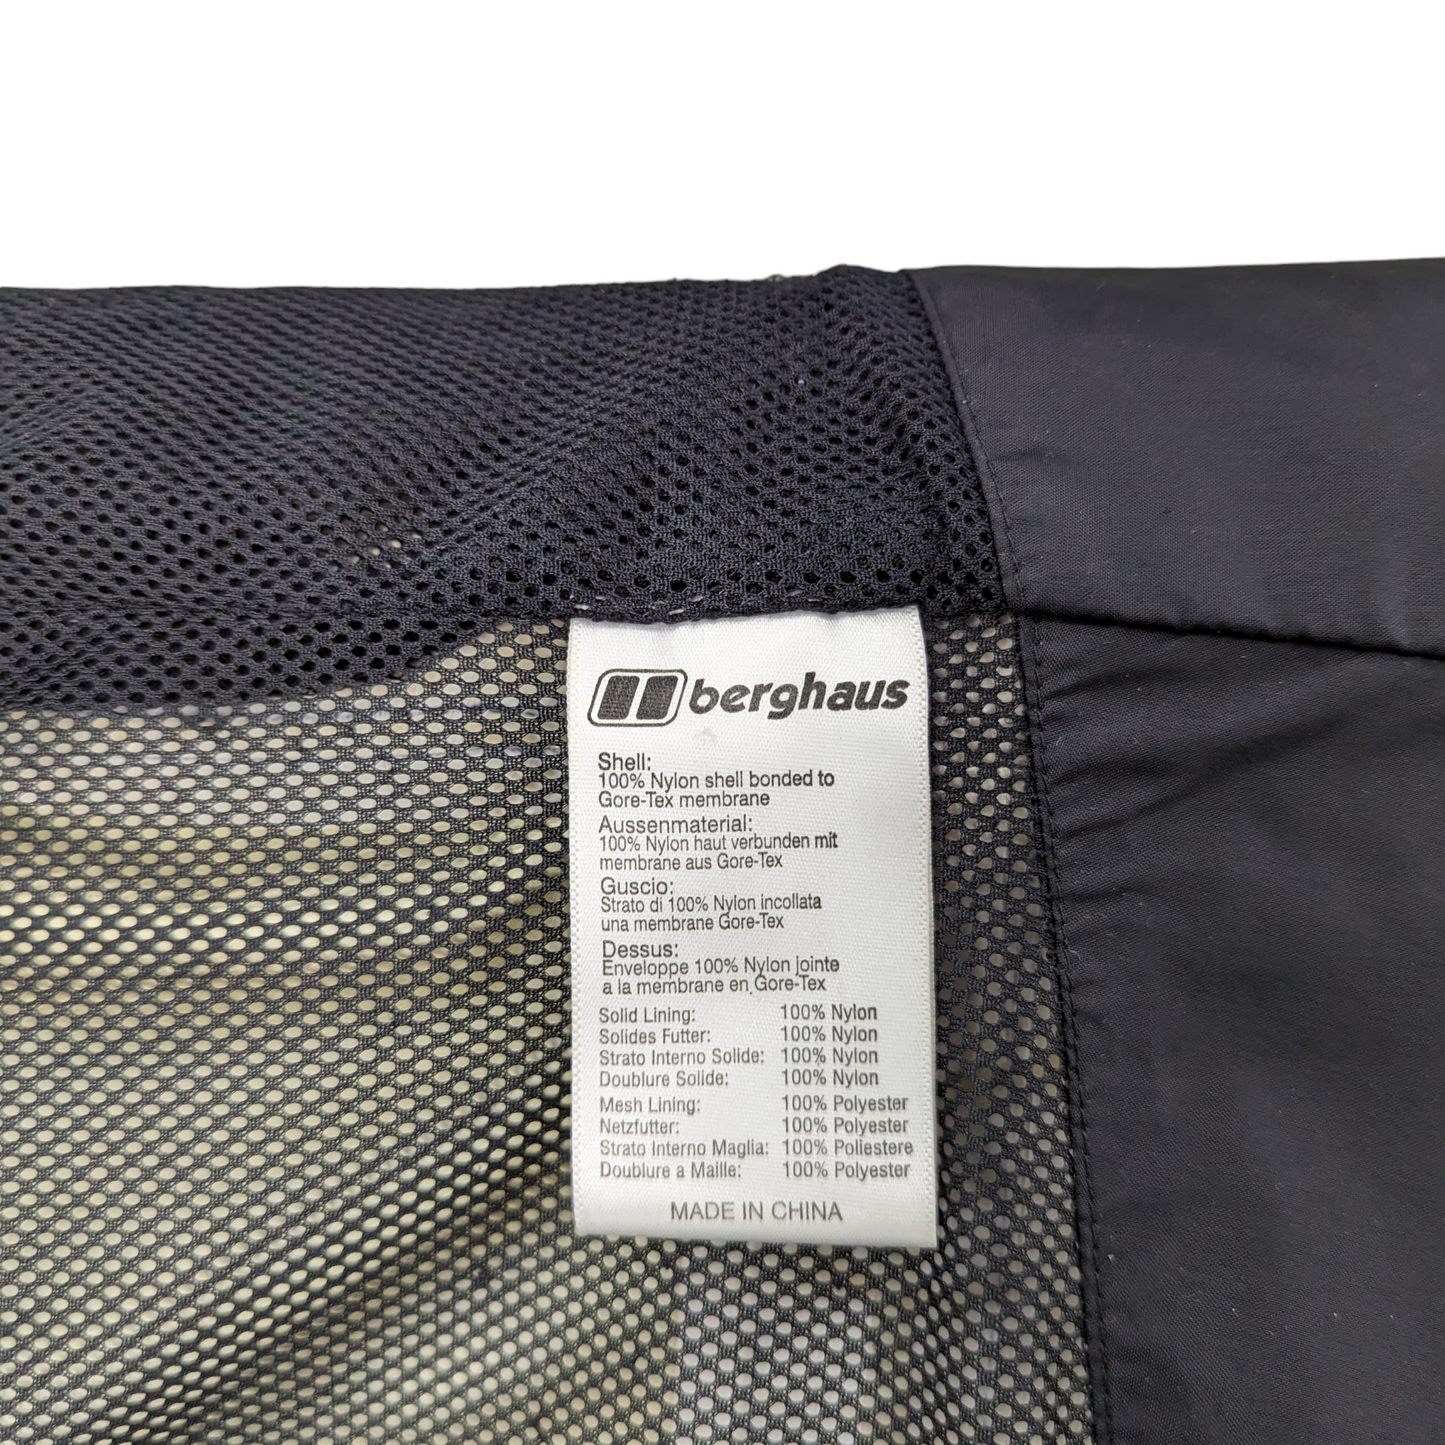 Berghaus GoreTex Raincoat Size UK 14